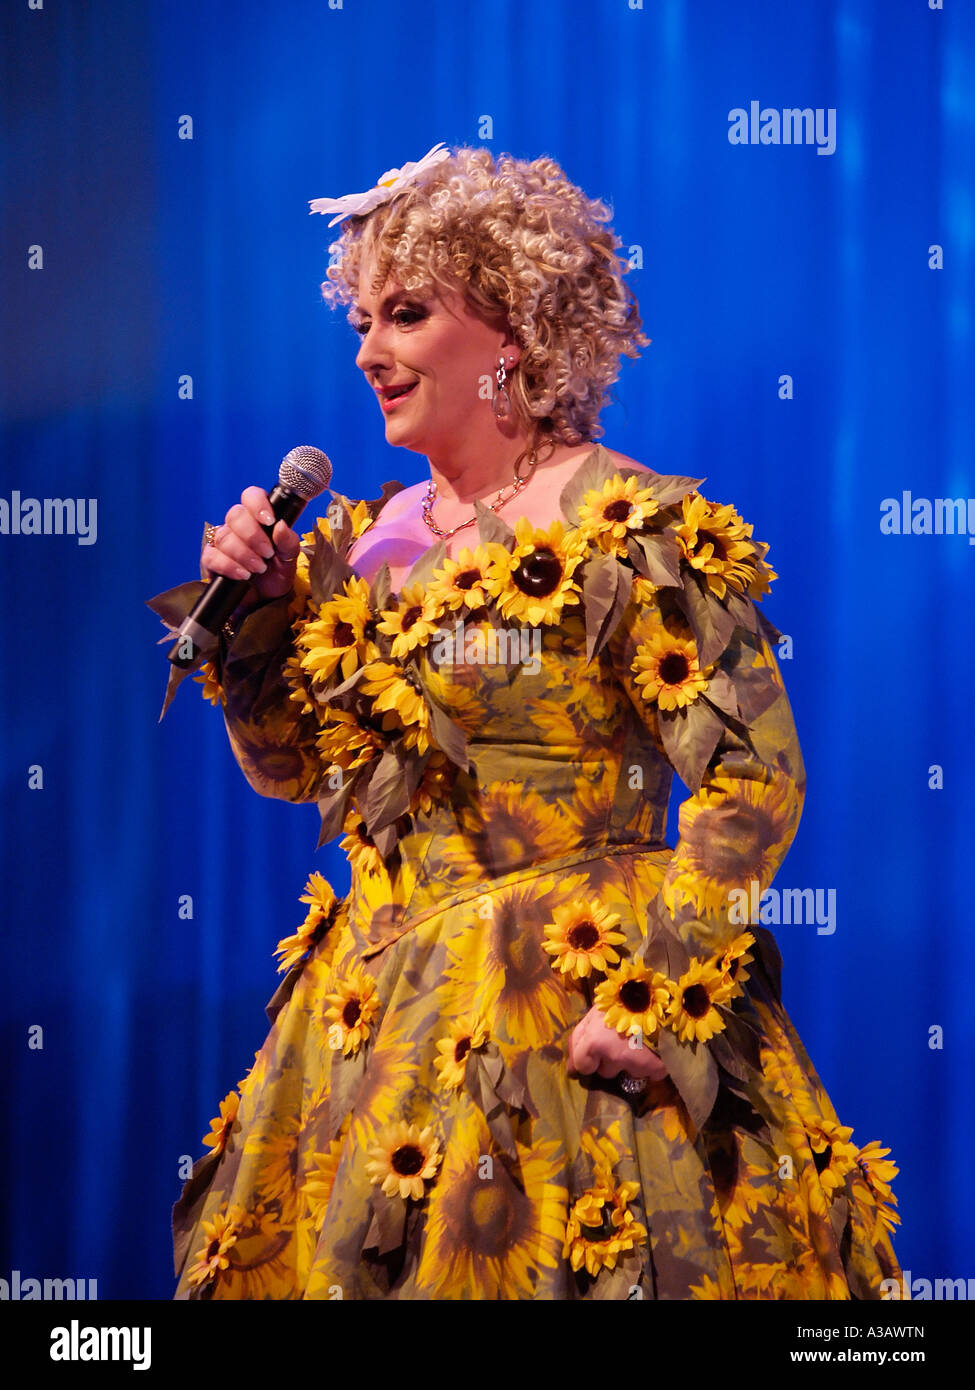 Dutch performer singer diva Karin Bloemen live on stage wearing one of her trademark flower dresses Aalsmeer the Netherlands Stock Photo